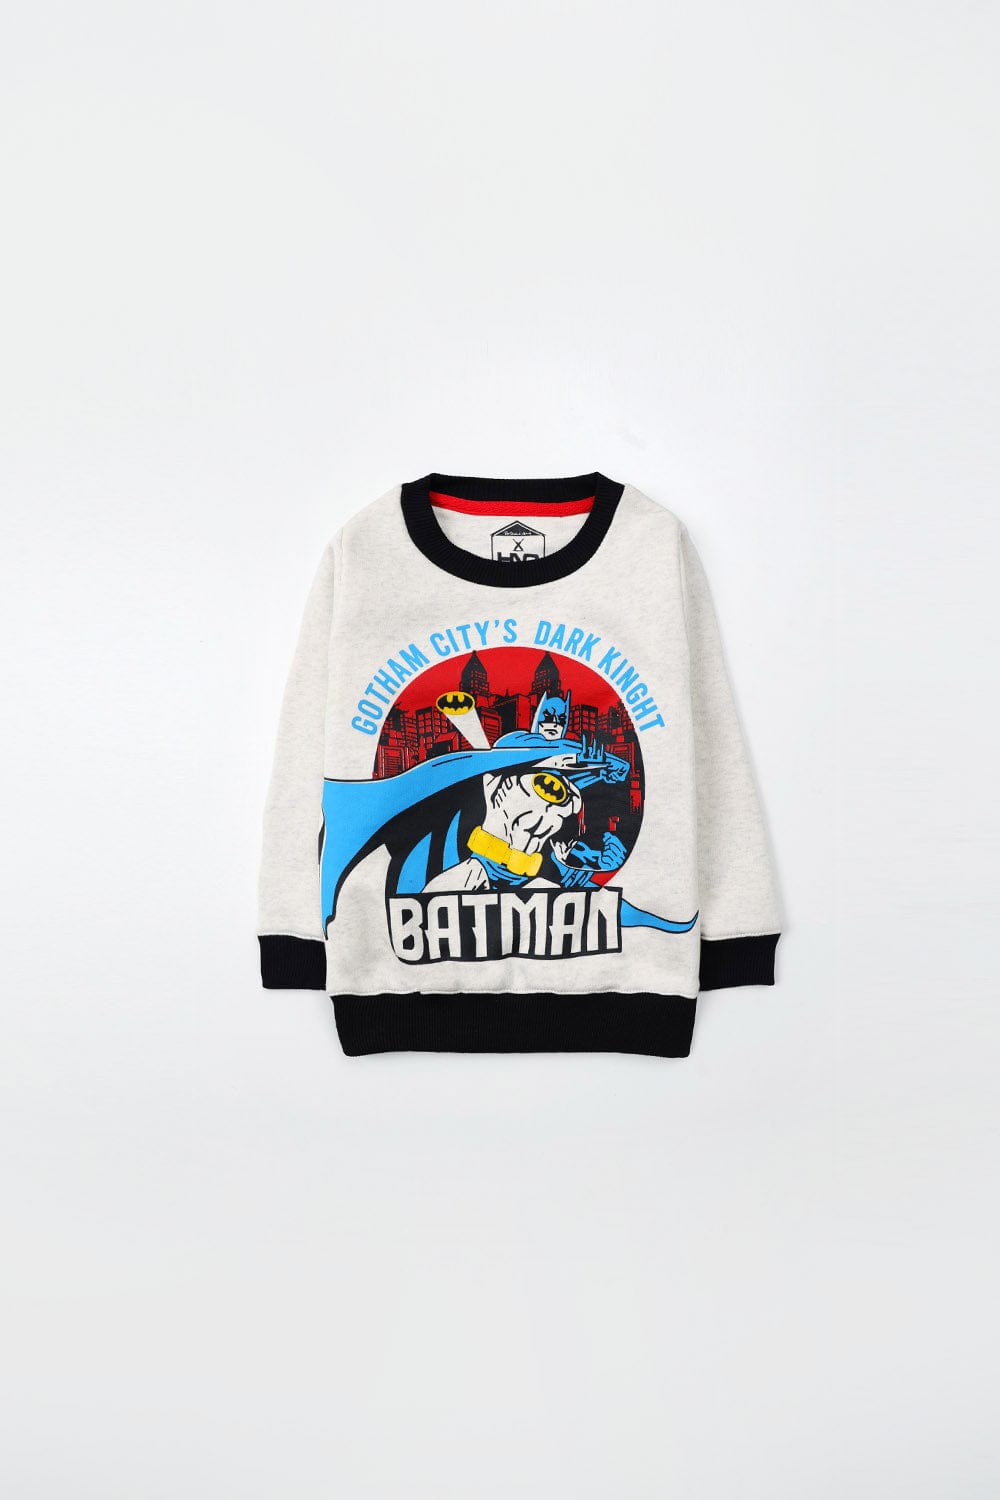 Hope Not Out by Shahid Afridi Boys Knit Sweat Shirt Batman Sweatshirt